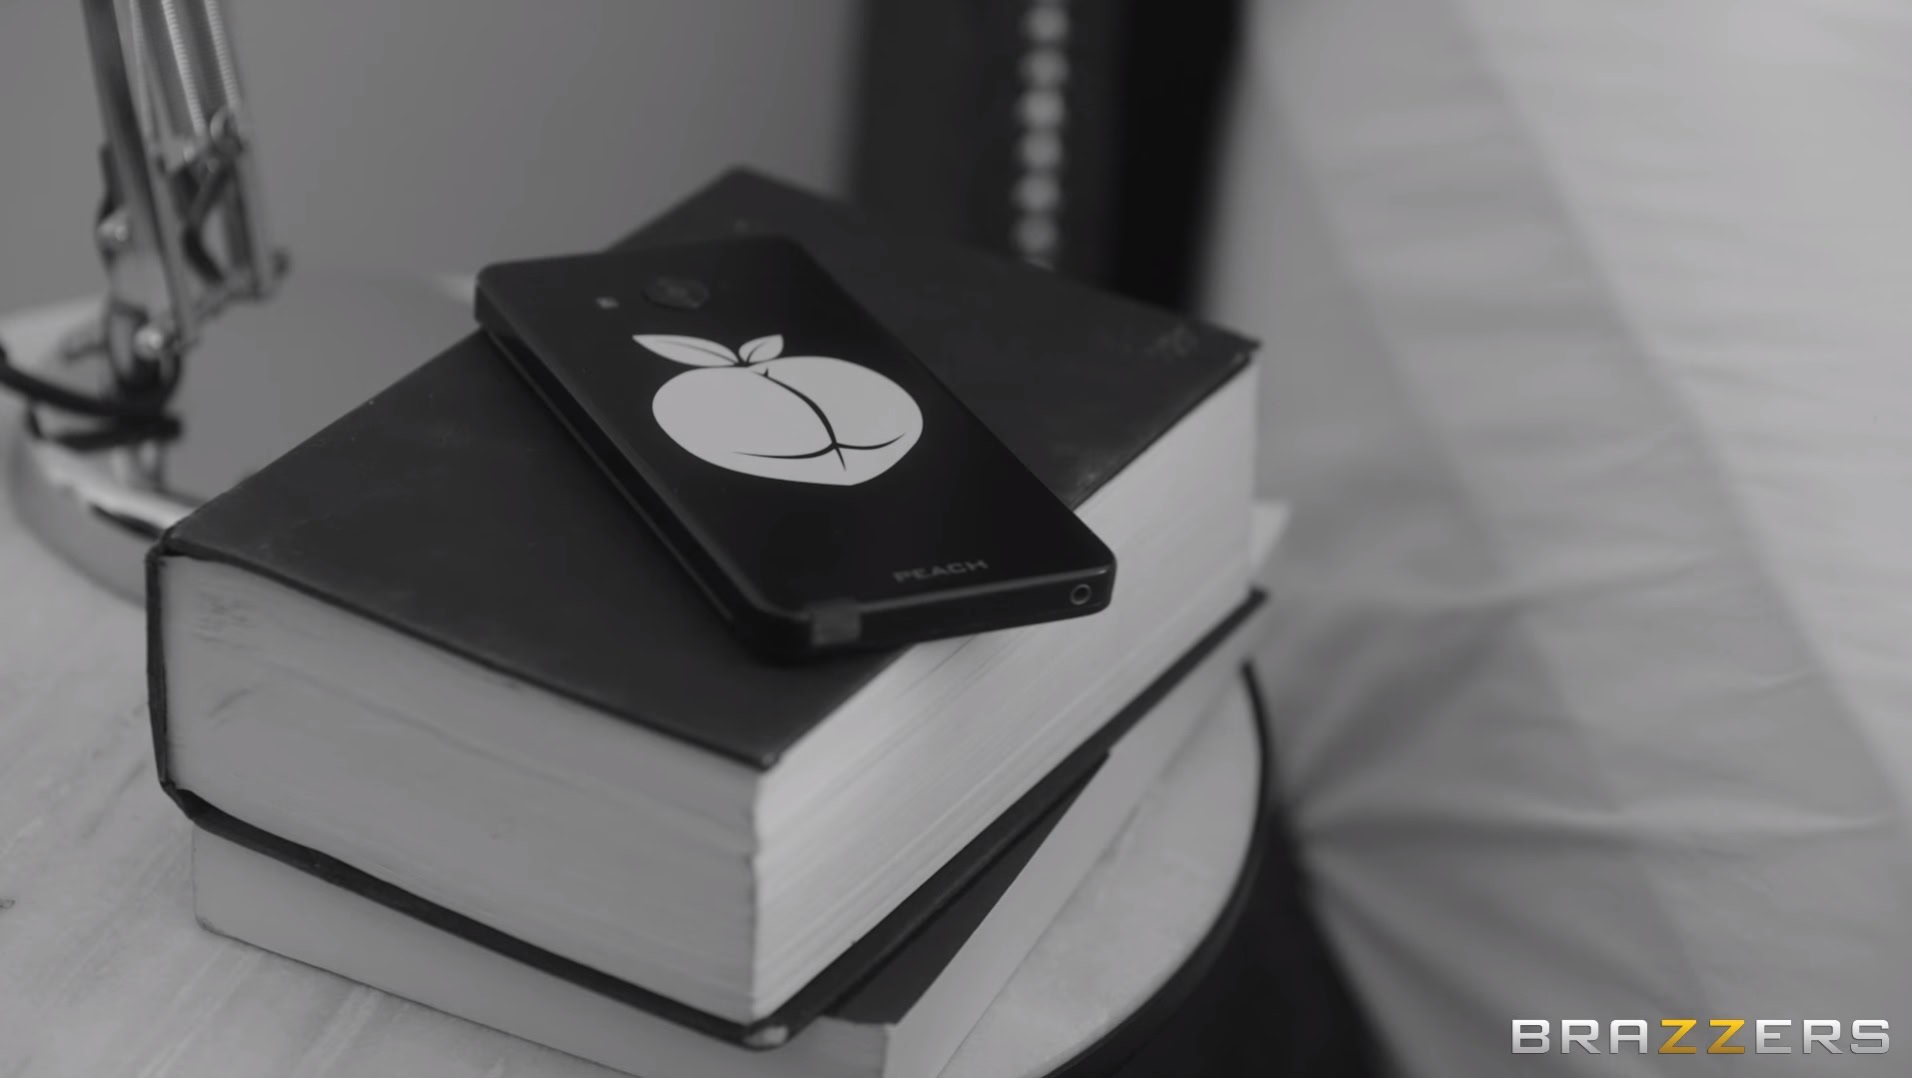 Mikandi Peach Cam - NSFW: Adult film network Brazzers makes a parody smartphone concept